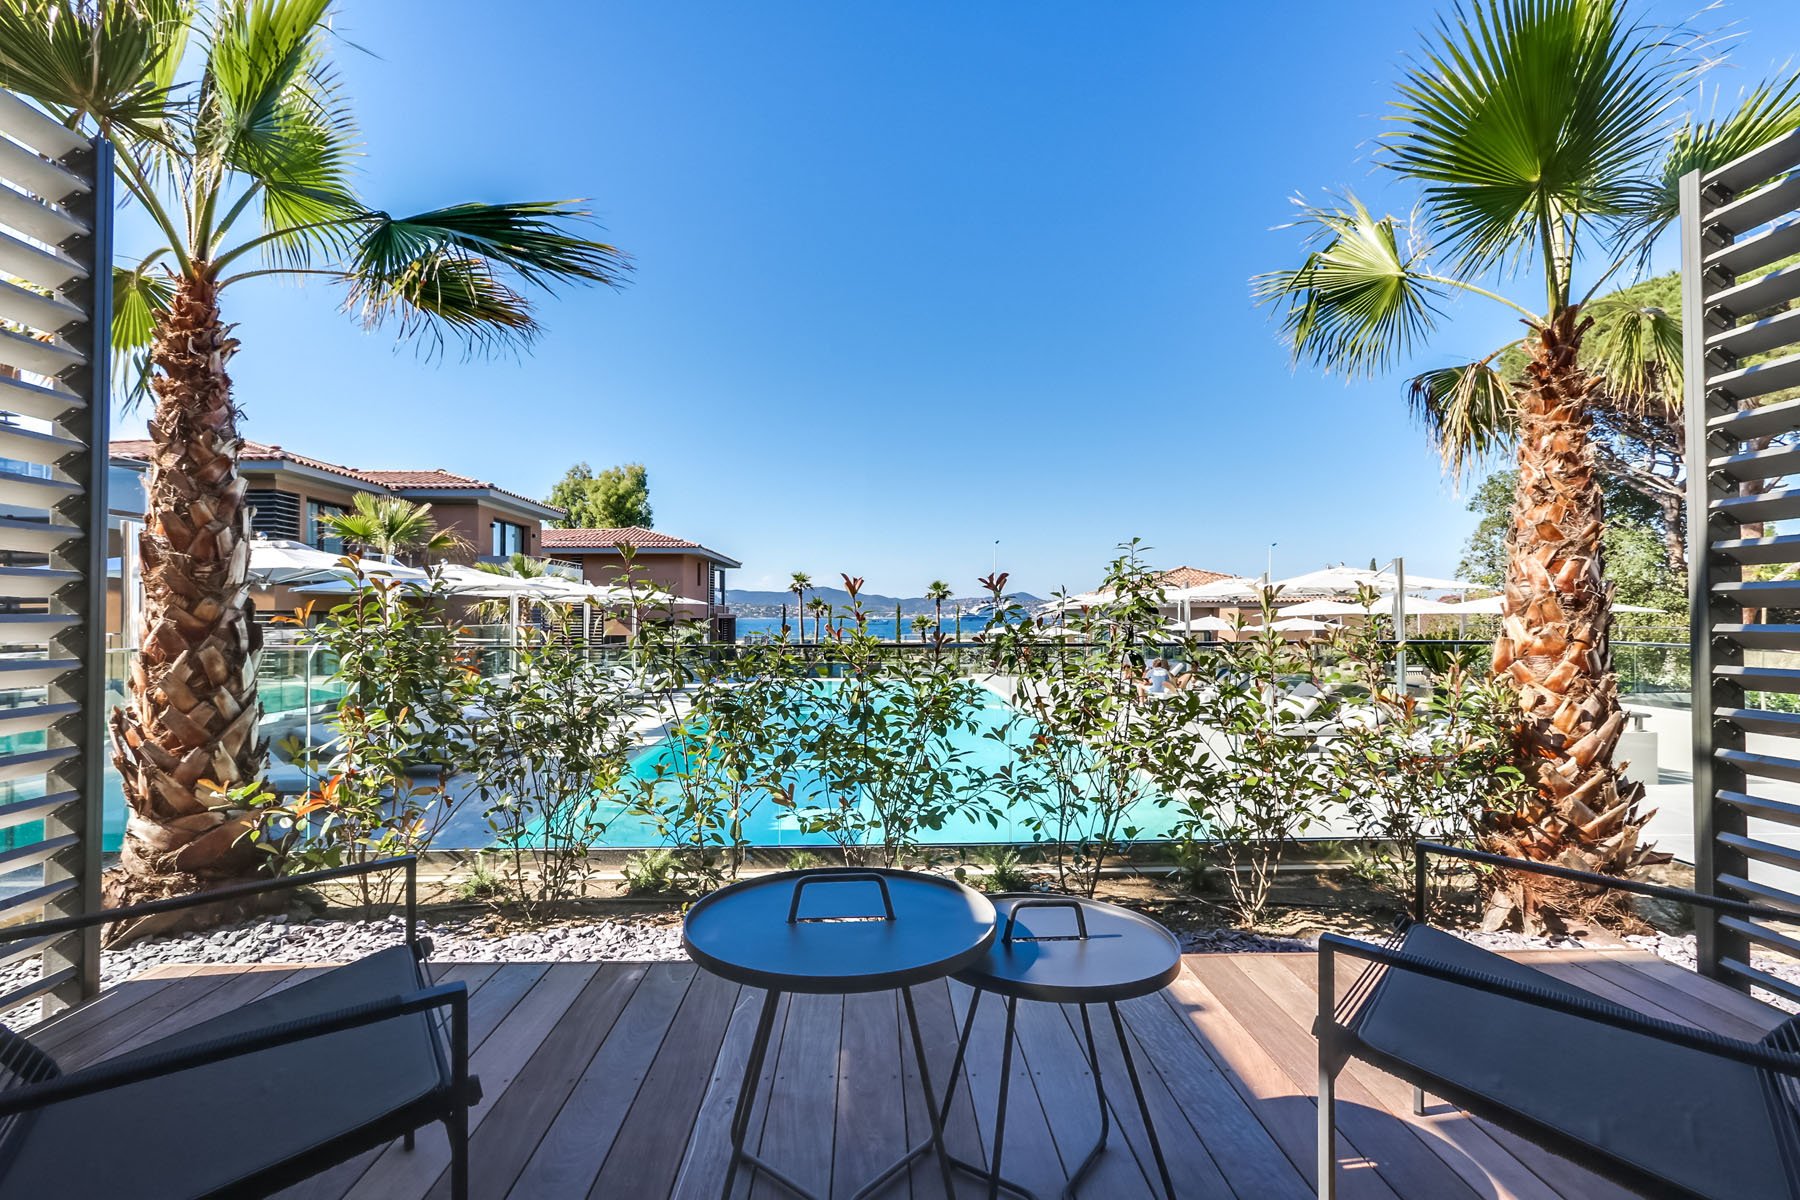 L Pool - Kube Hotel Saint-Tropez - South of France